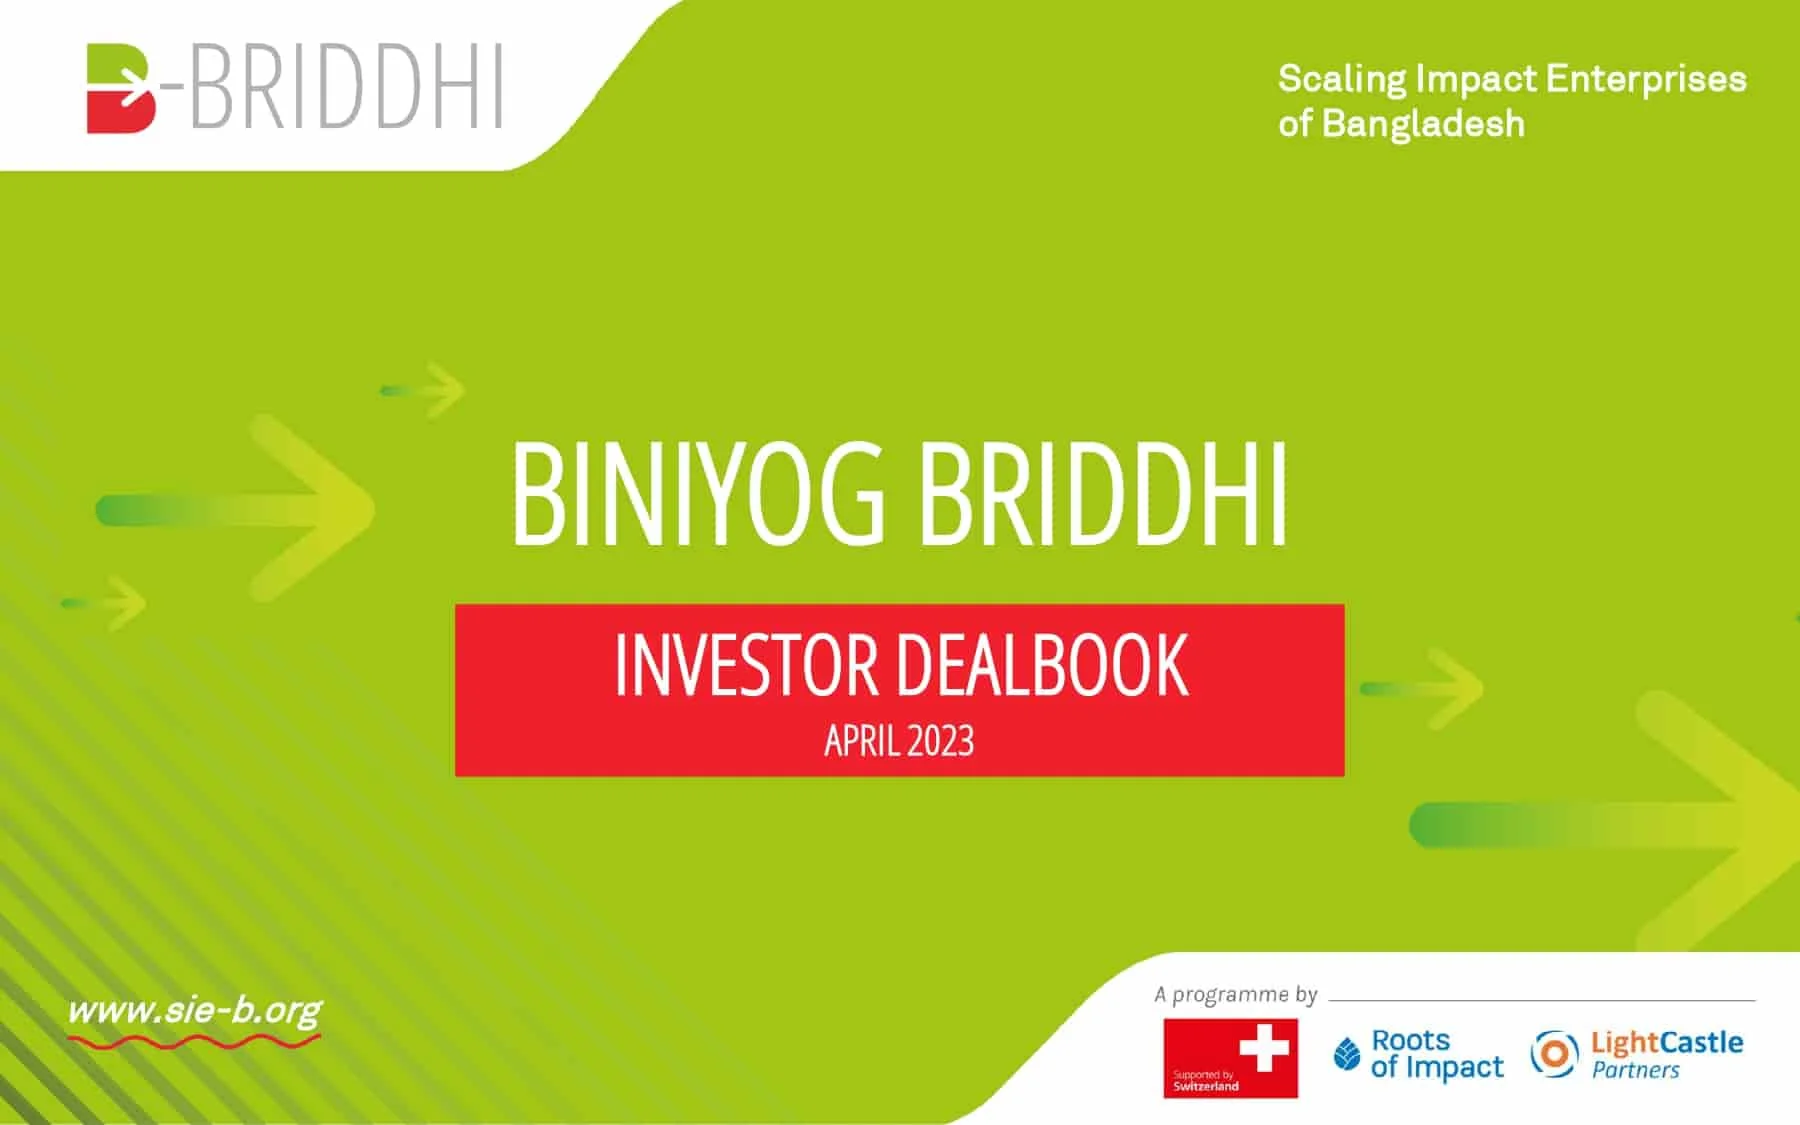 Biniyog Briddhi (B-Briddhi) Investor Dealbook 2023